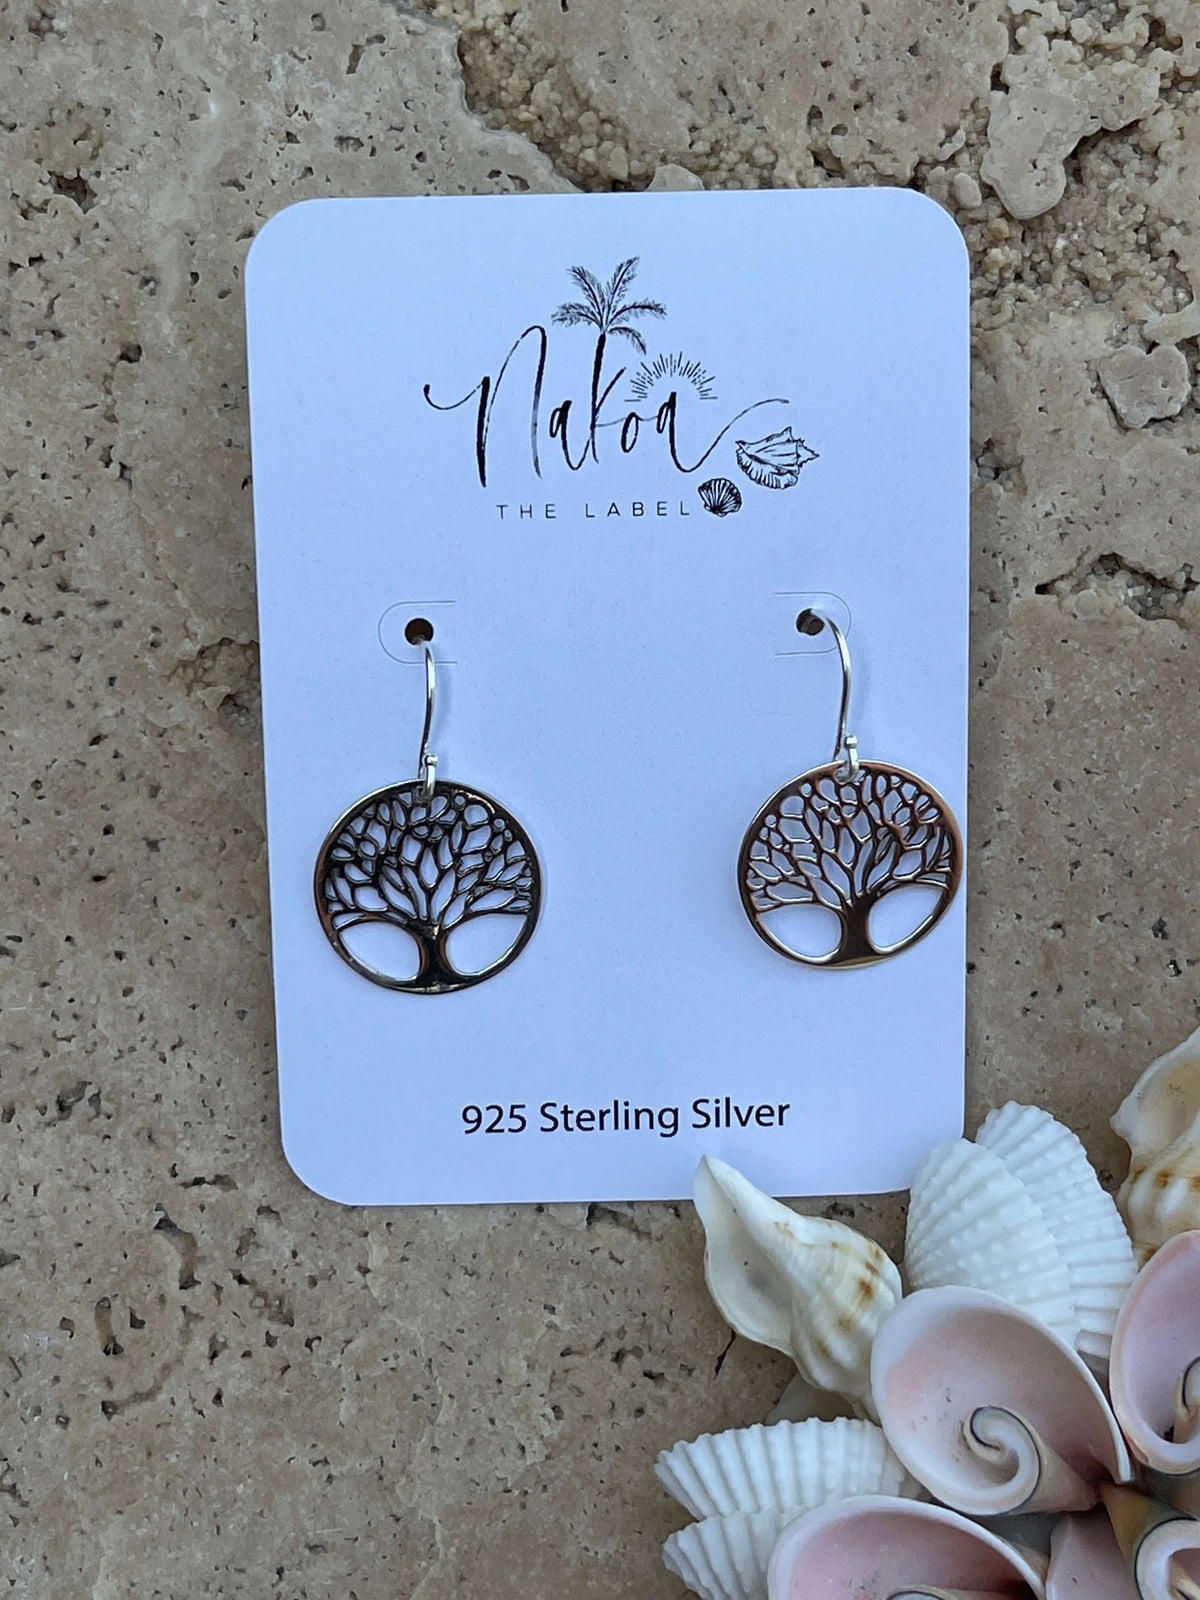 Silver Tree of Life Hook Earrings